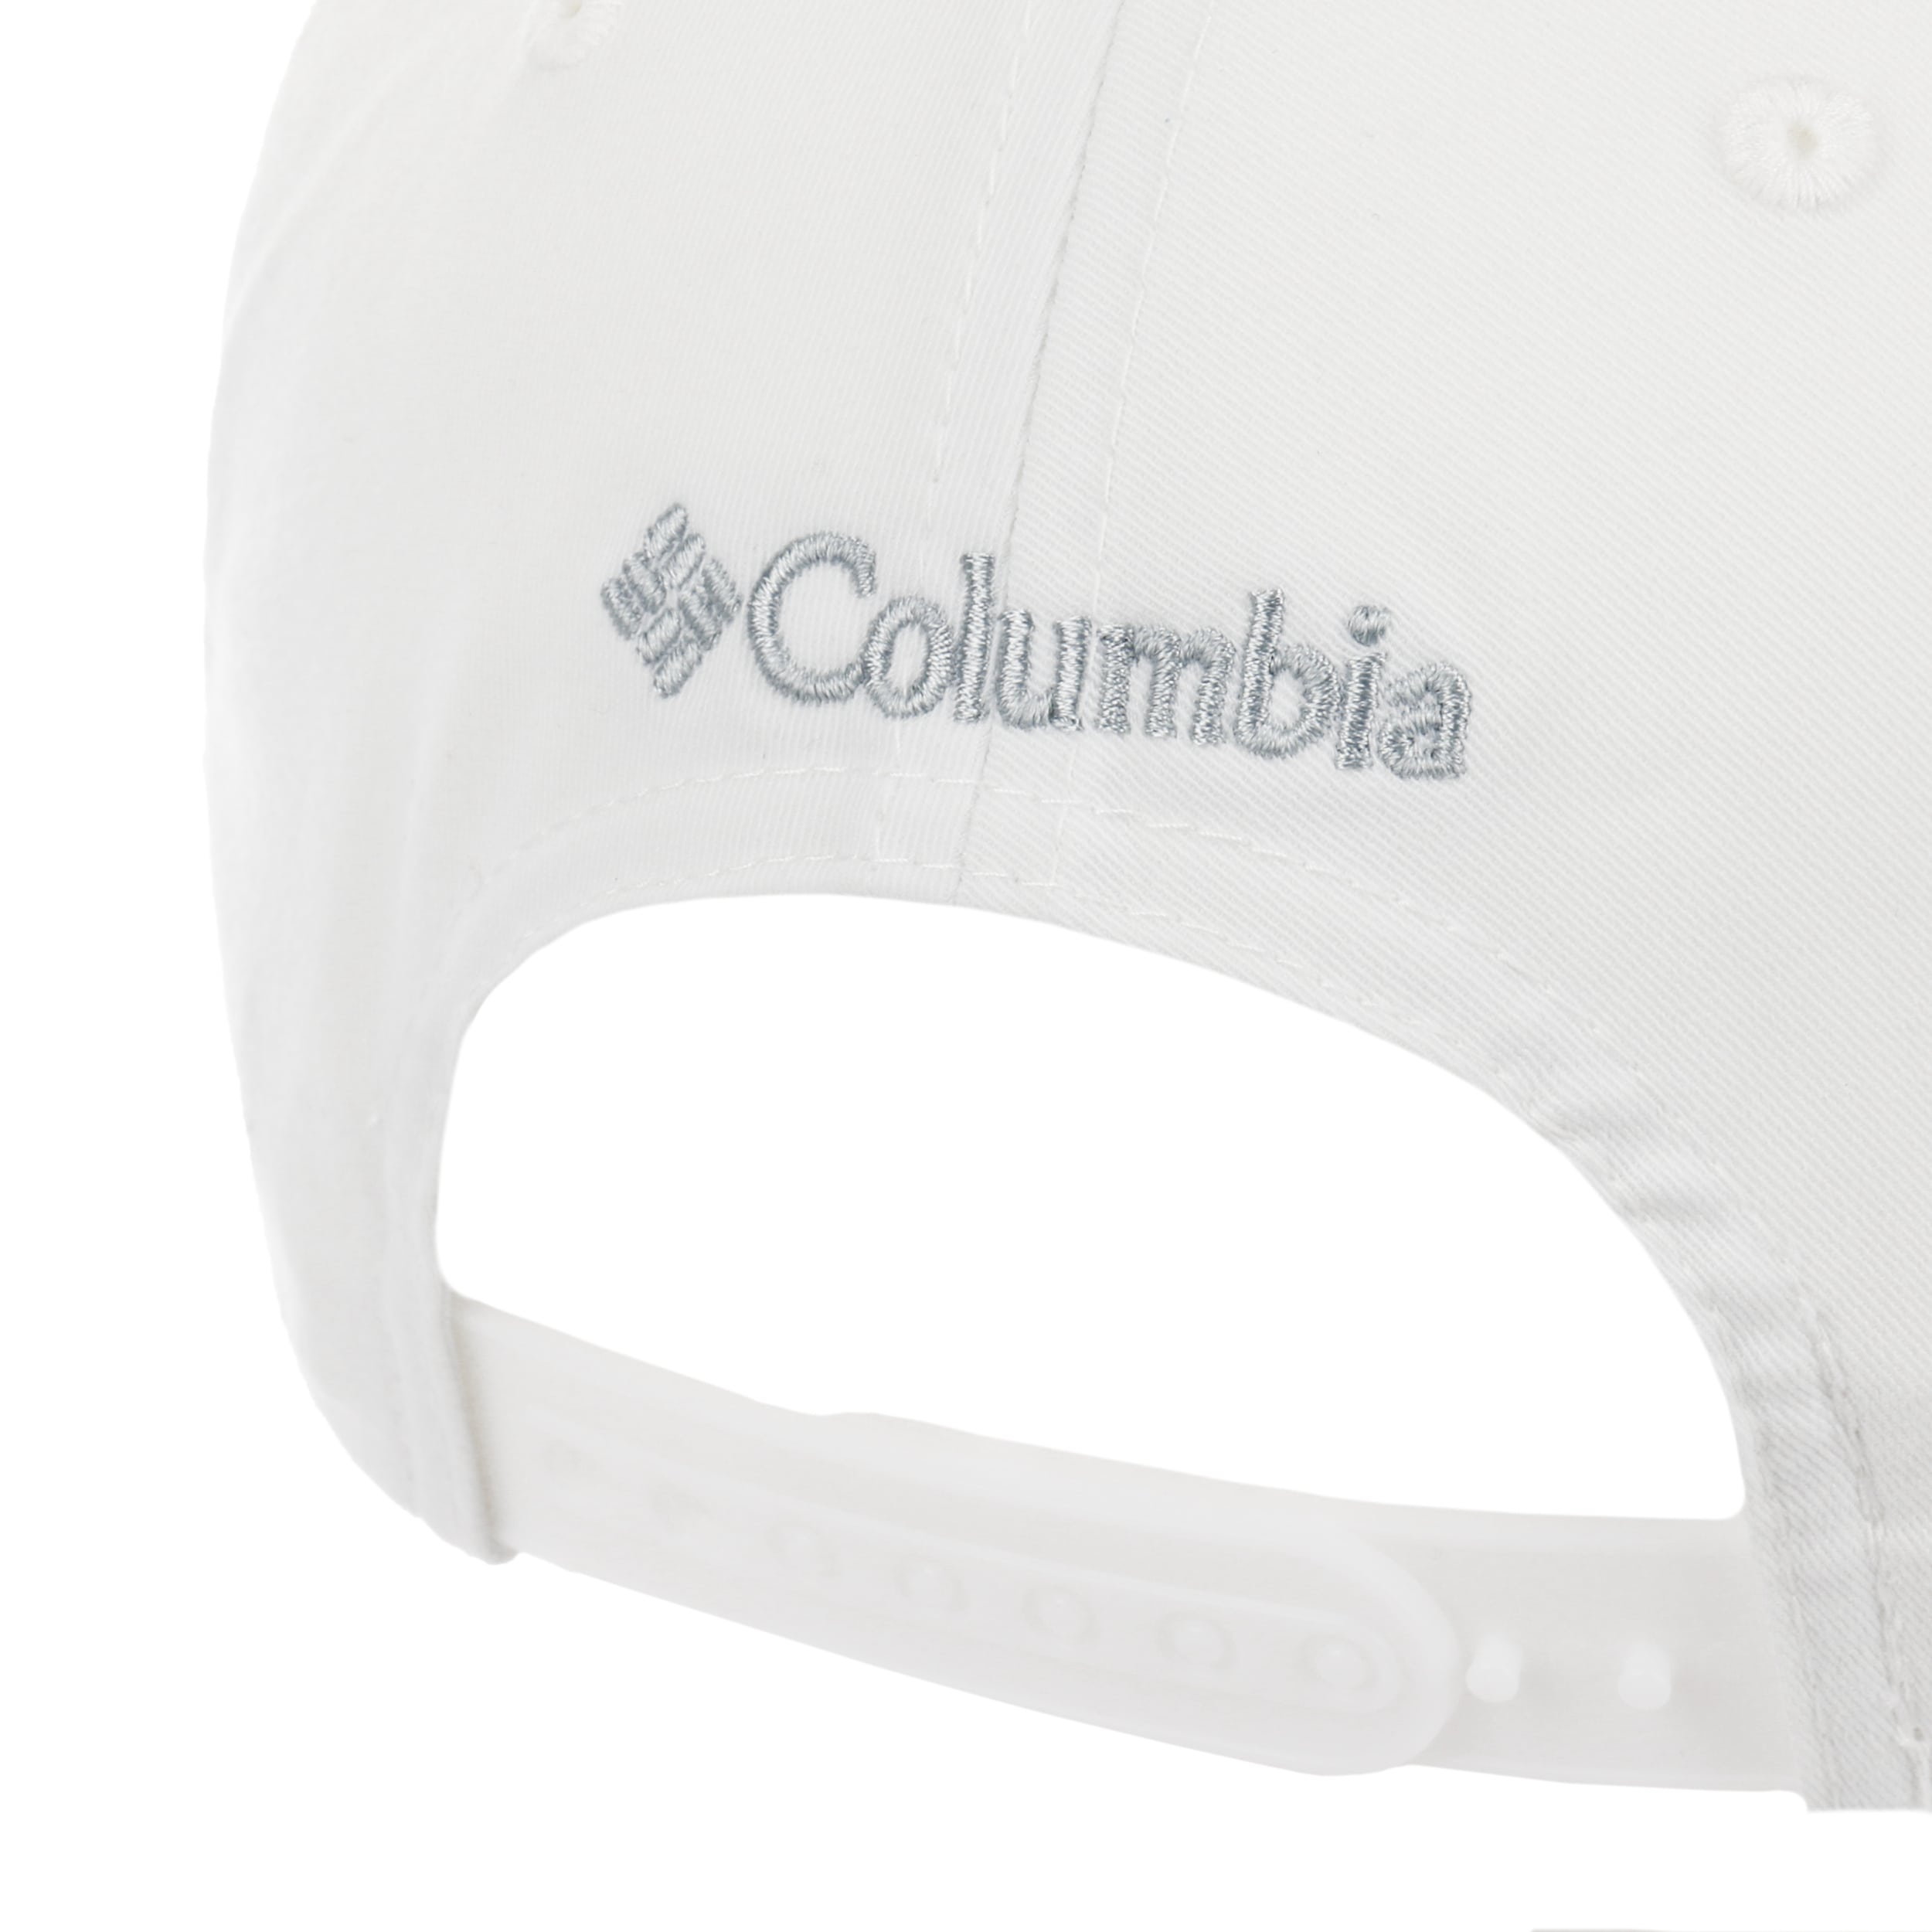 Columbia Men's Lost Lager 110 Snap Back Cap